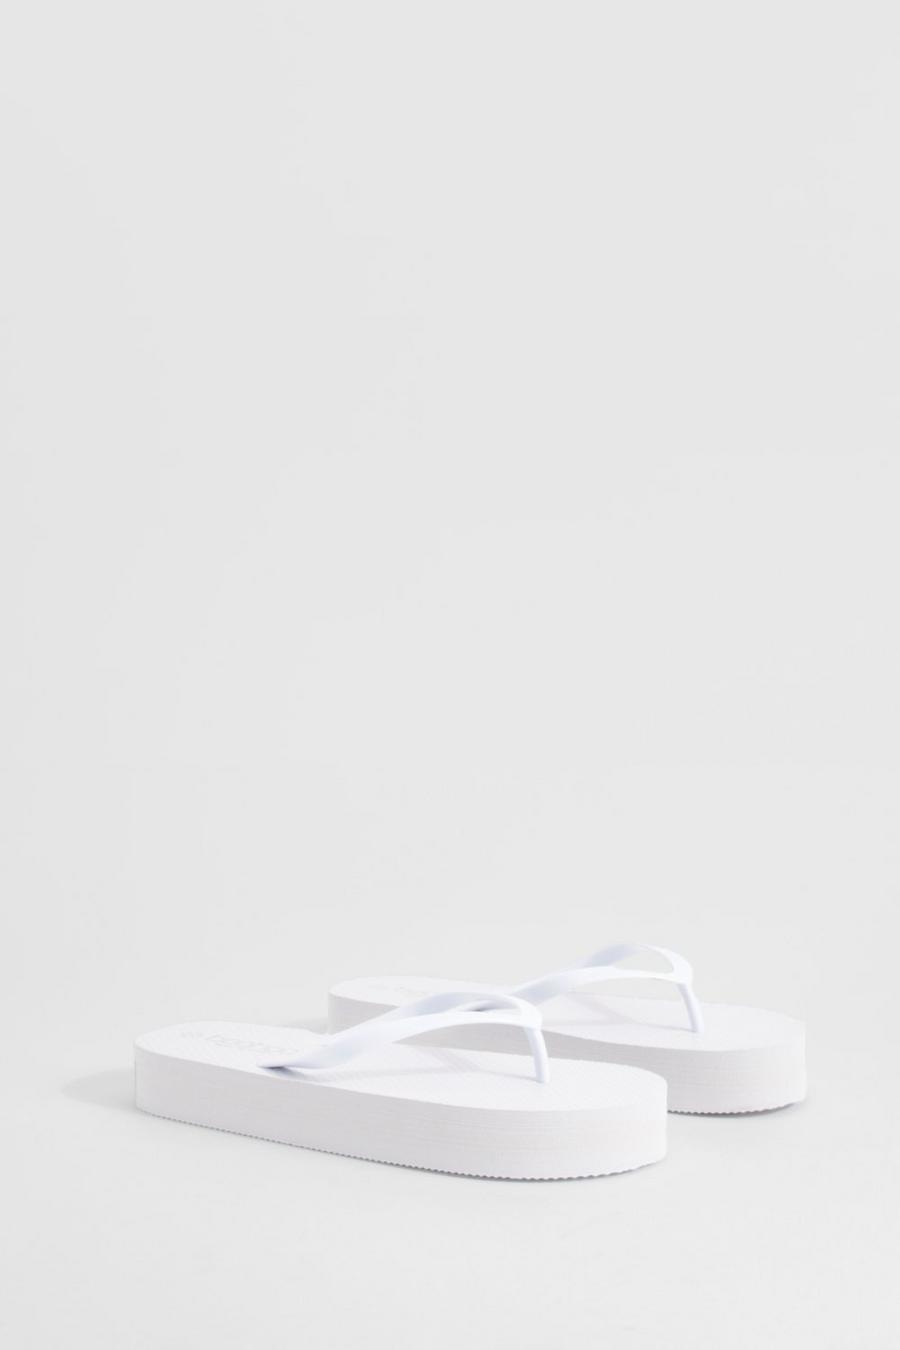 Sandales à plateforme, White